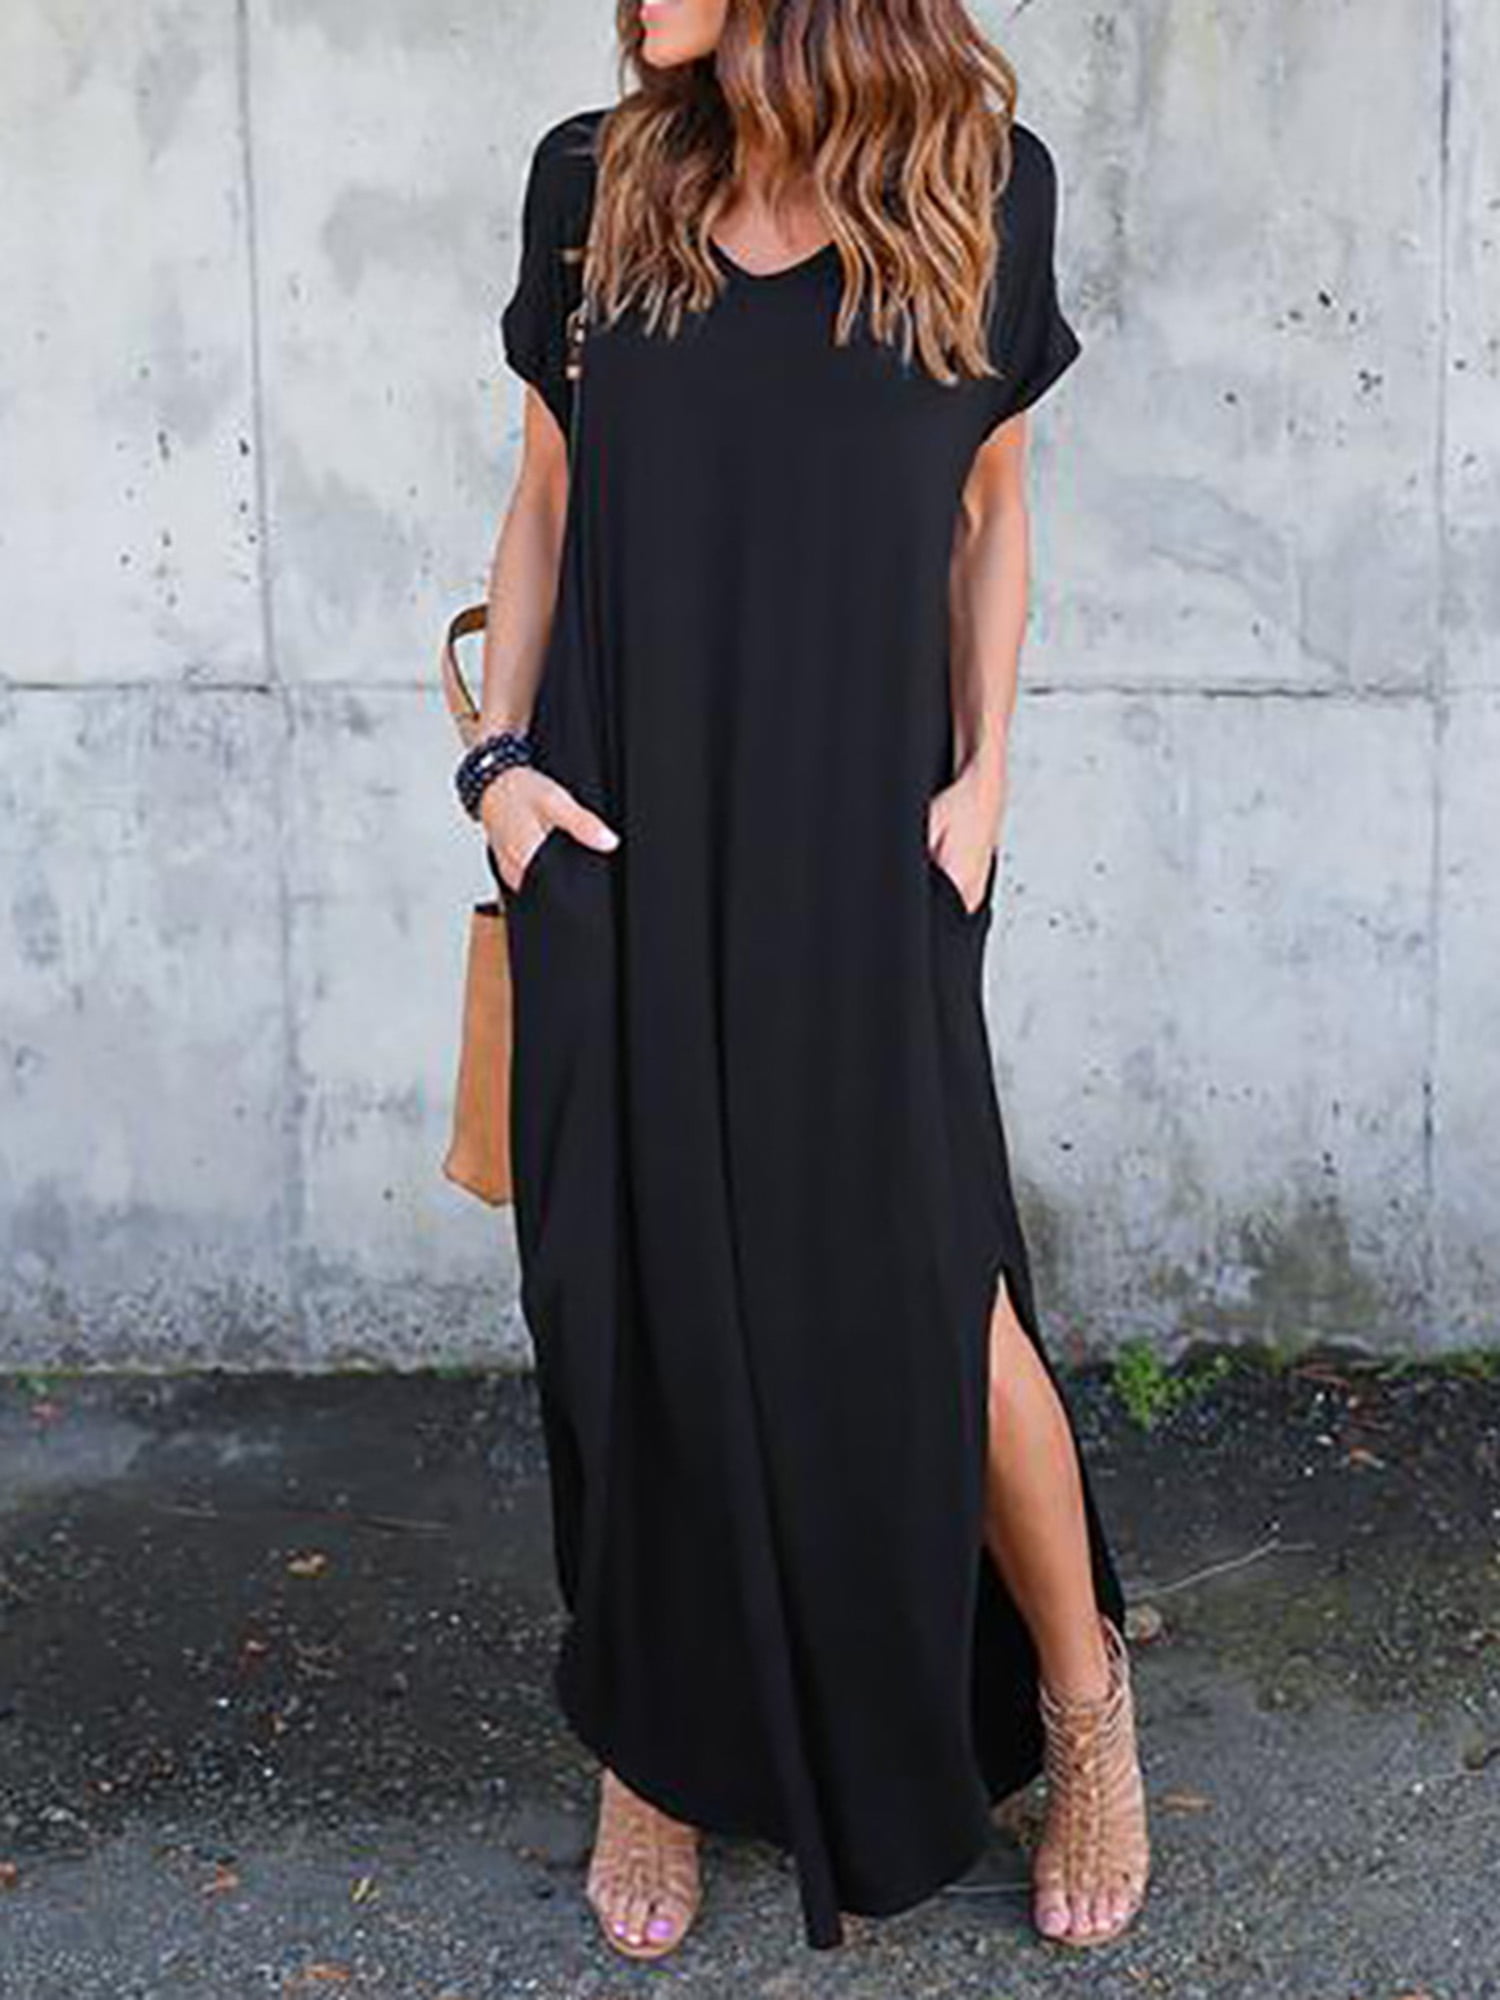 boho style black dress